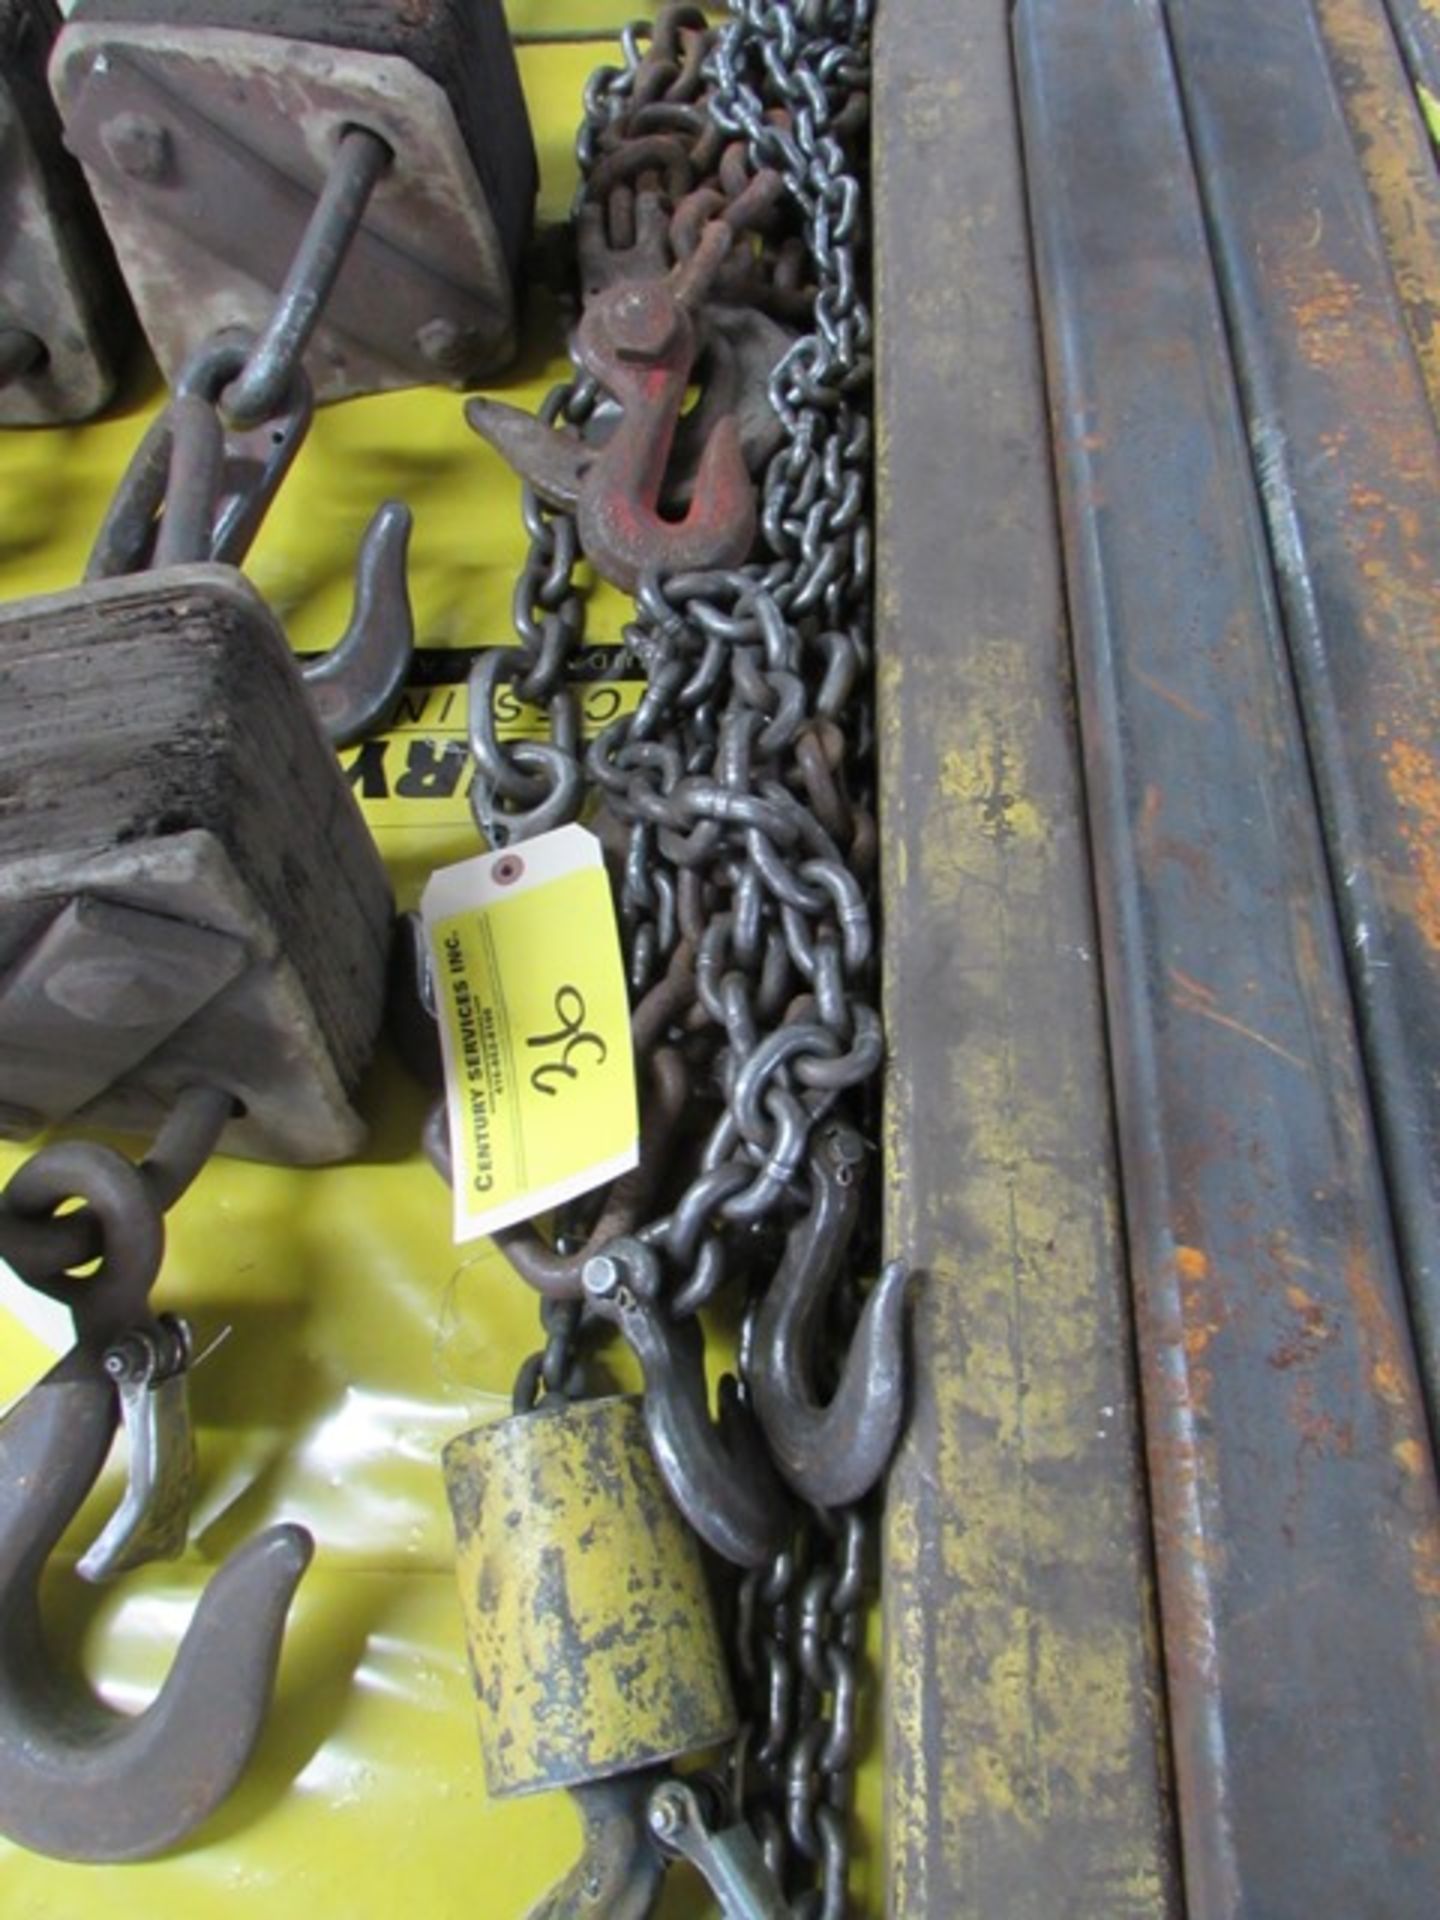 Lot lifting chains